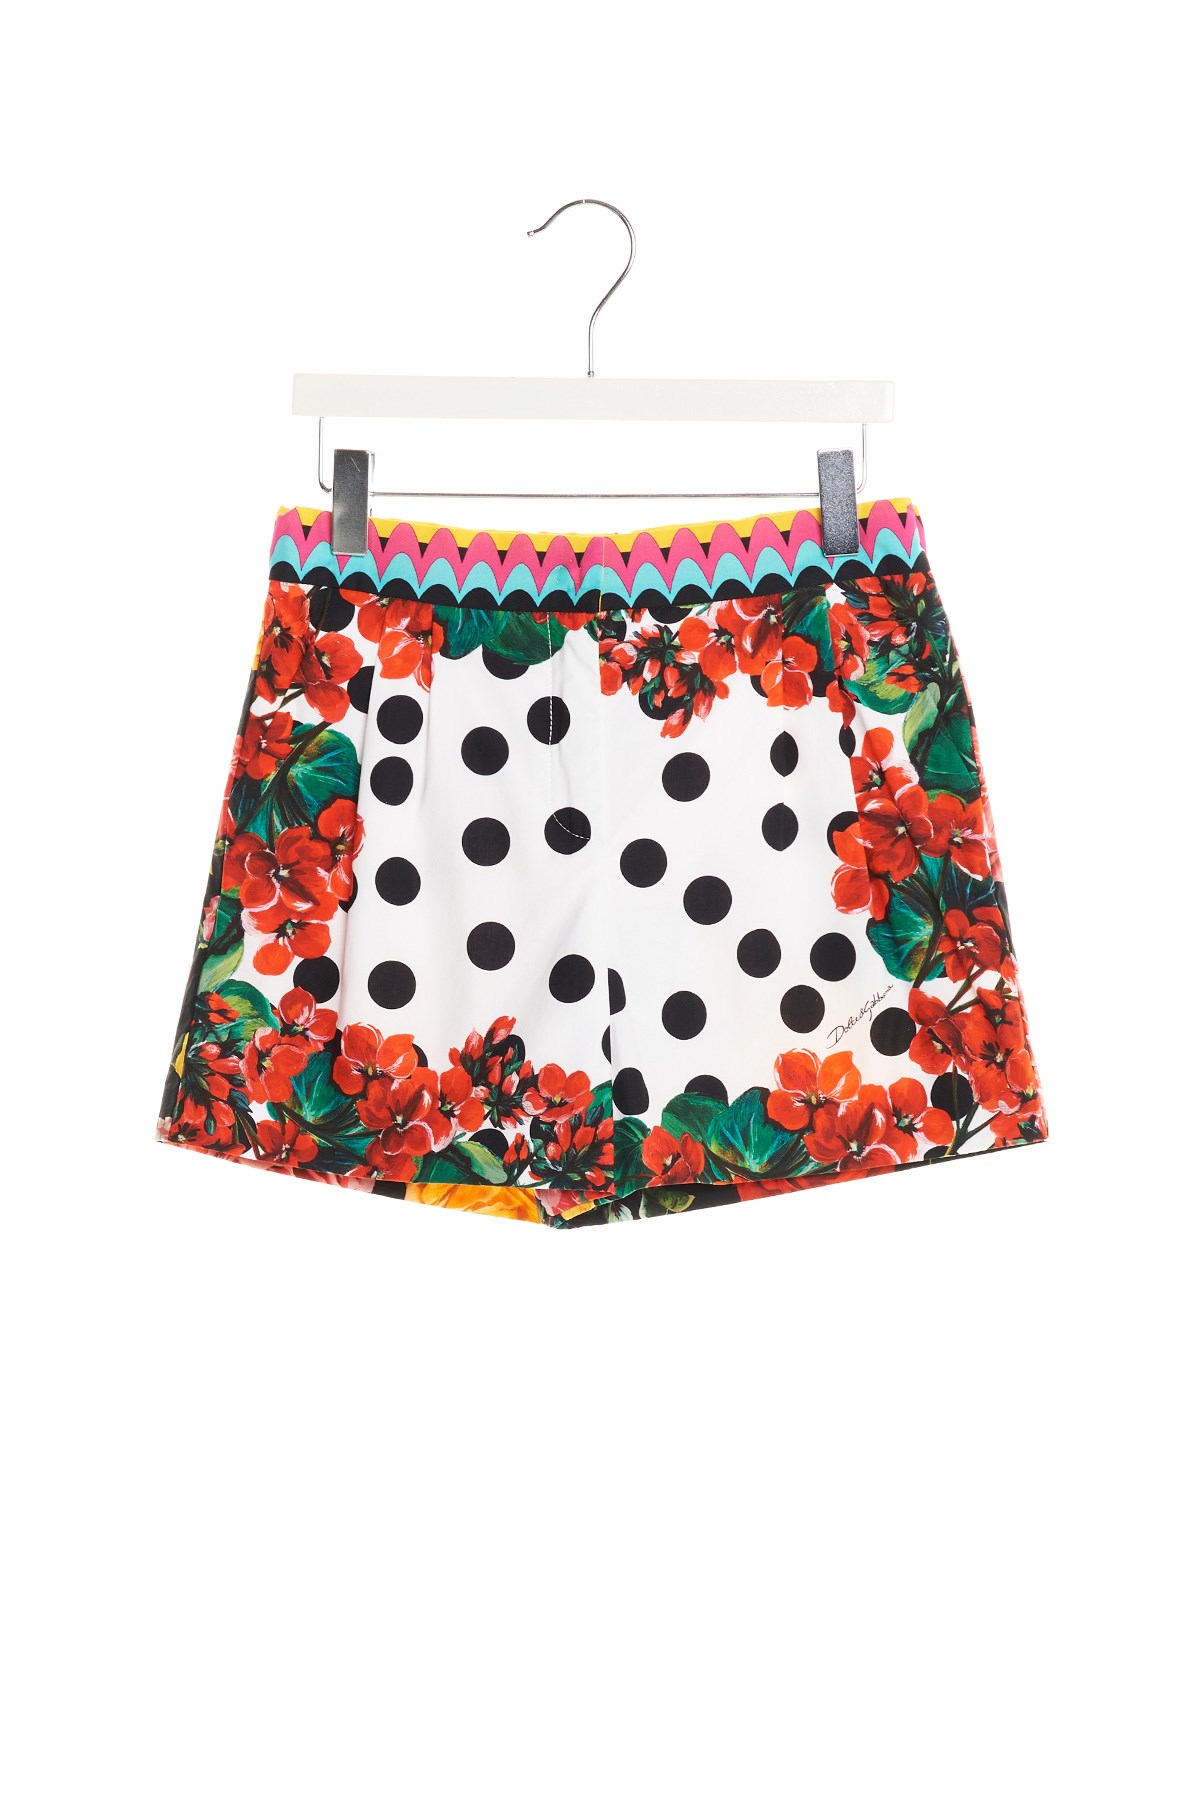 DOLCE & GABBANA Floral Print Shorts